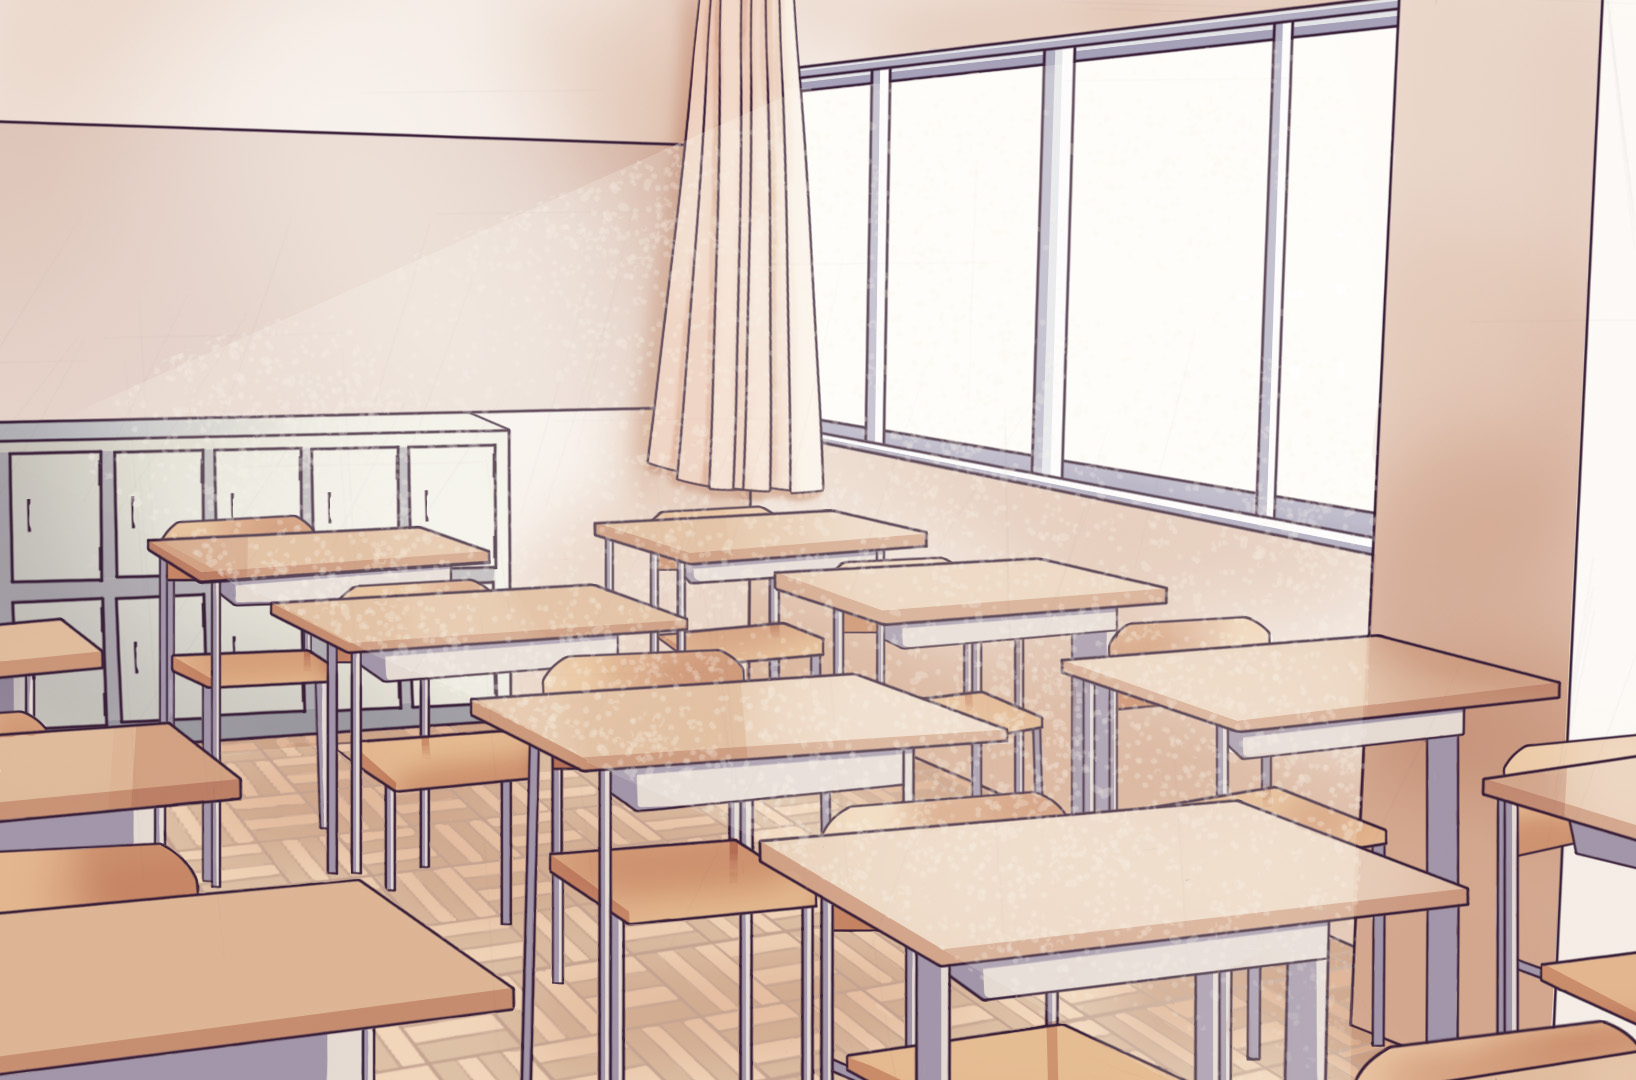 Indonesian Classroom Background (Anime Style) by erwinartha on DeviantArt